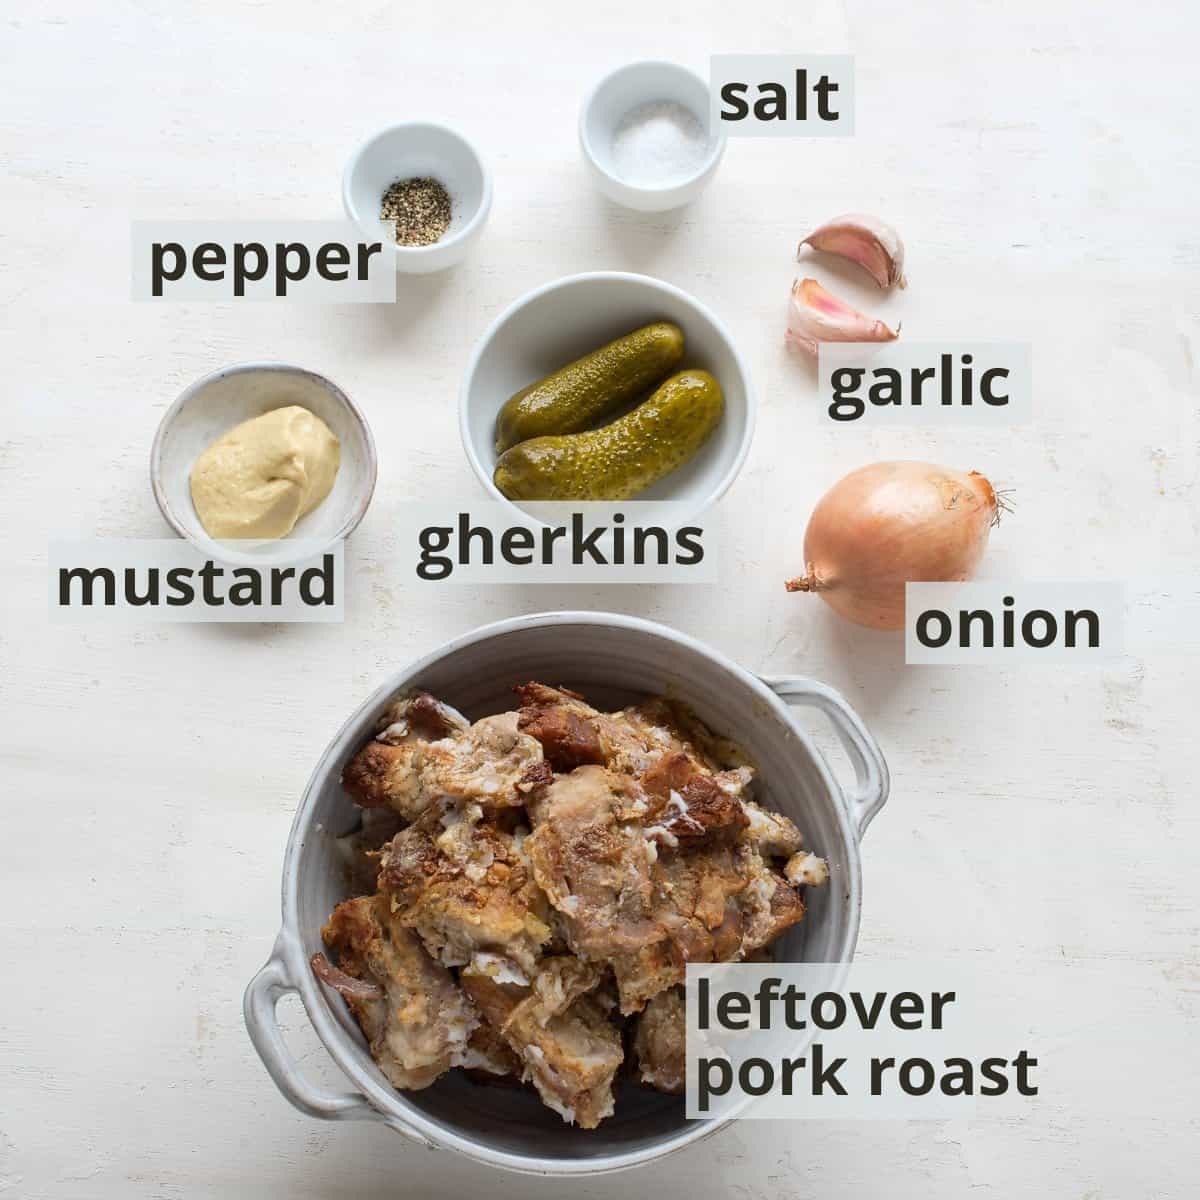 Labeled ingredients for Czech leftover pork roast spread.